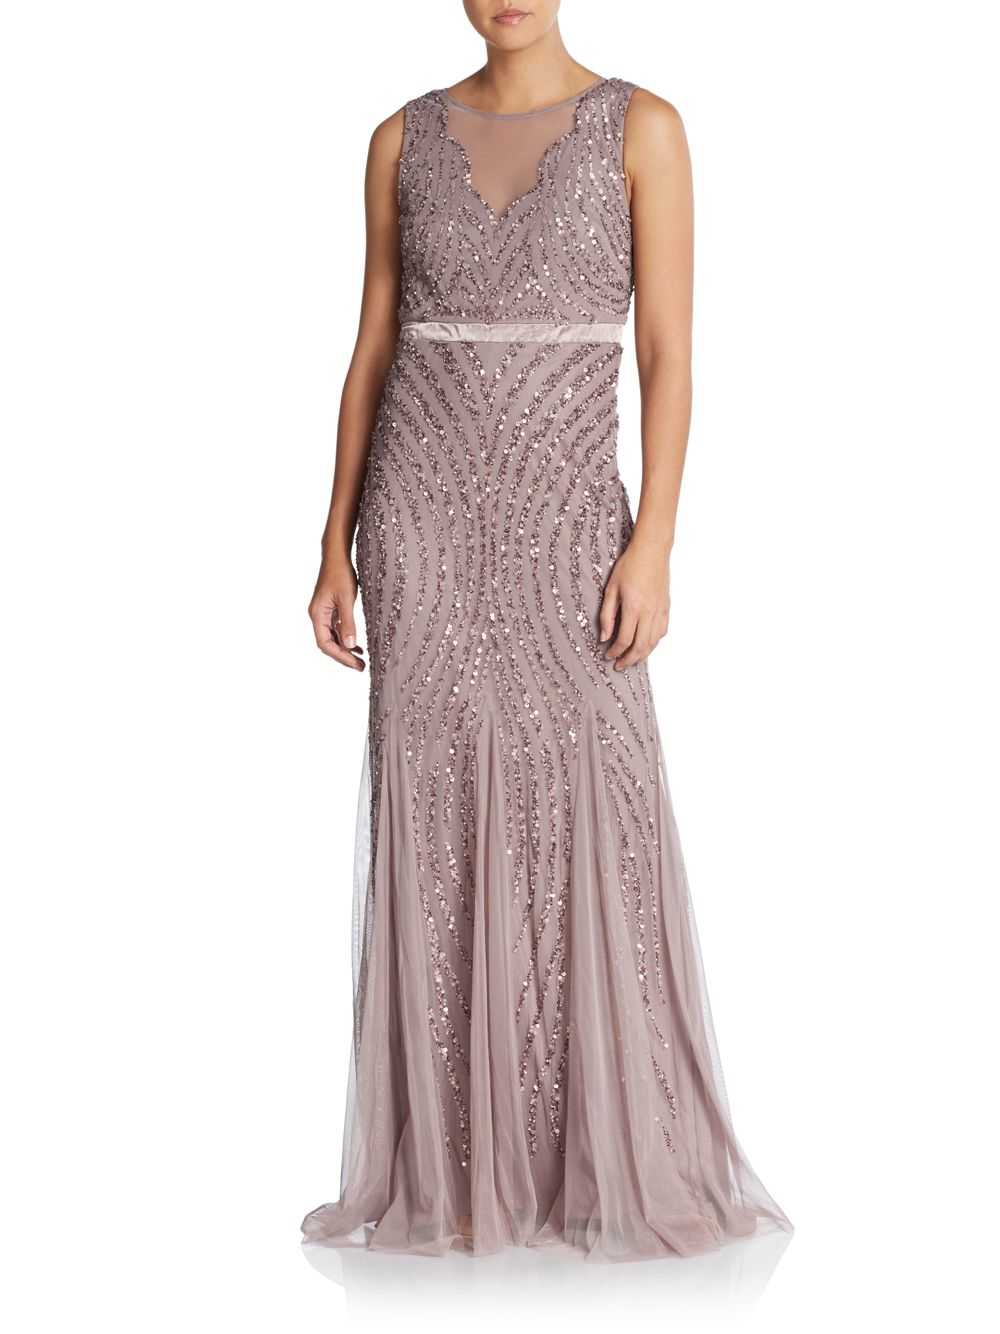 Debenhams Bridal Gowns Deals Cheapest | www.fskl-cg.me